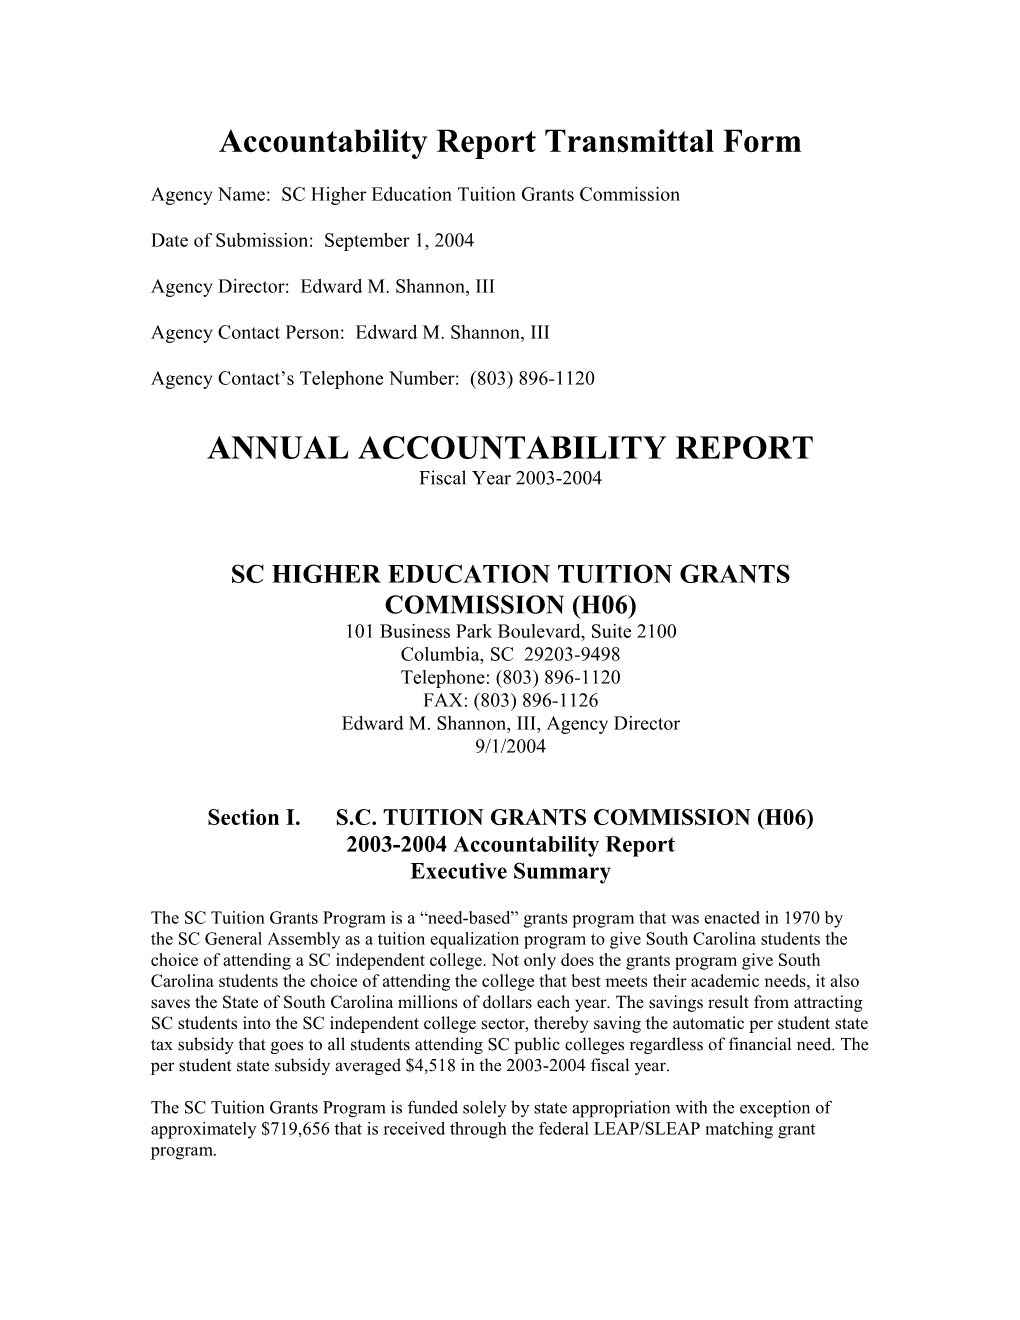 Annual Accountability Report